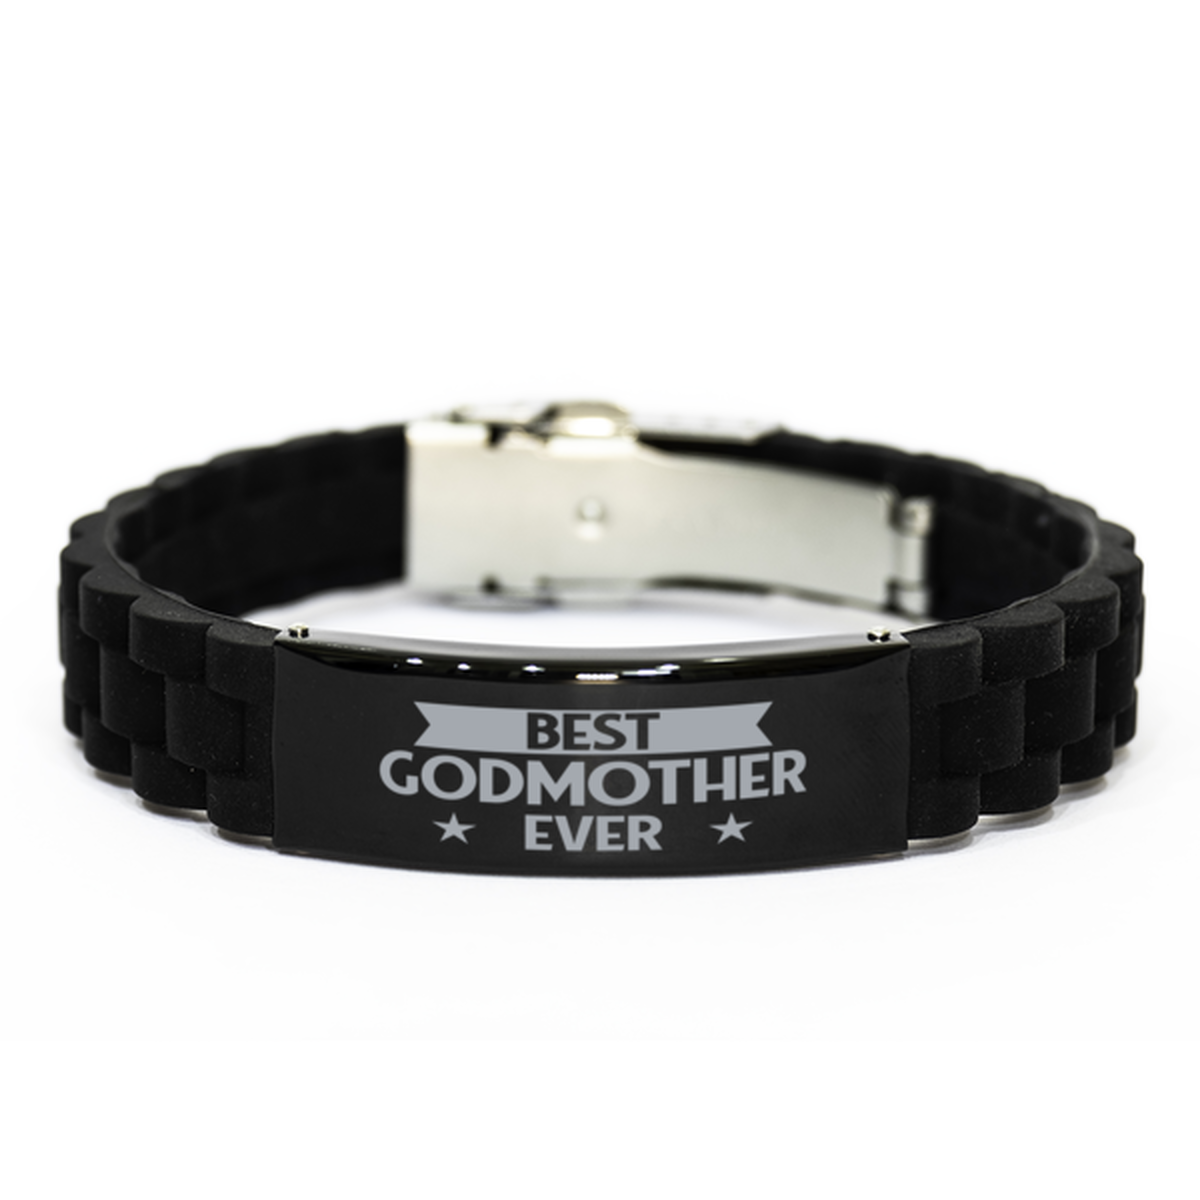 Best Godmother Ever Godmother Gifts, Funny Black Engraved Bracelet For Godmother, Family Gifts For Women